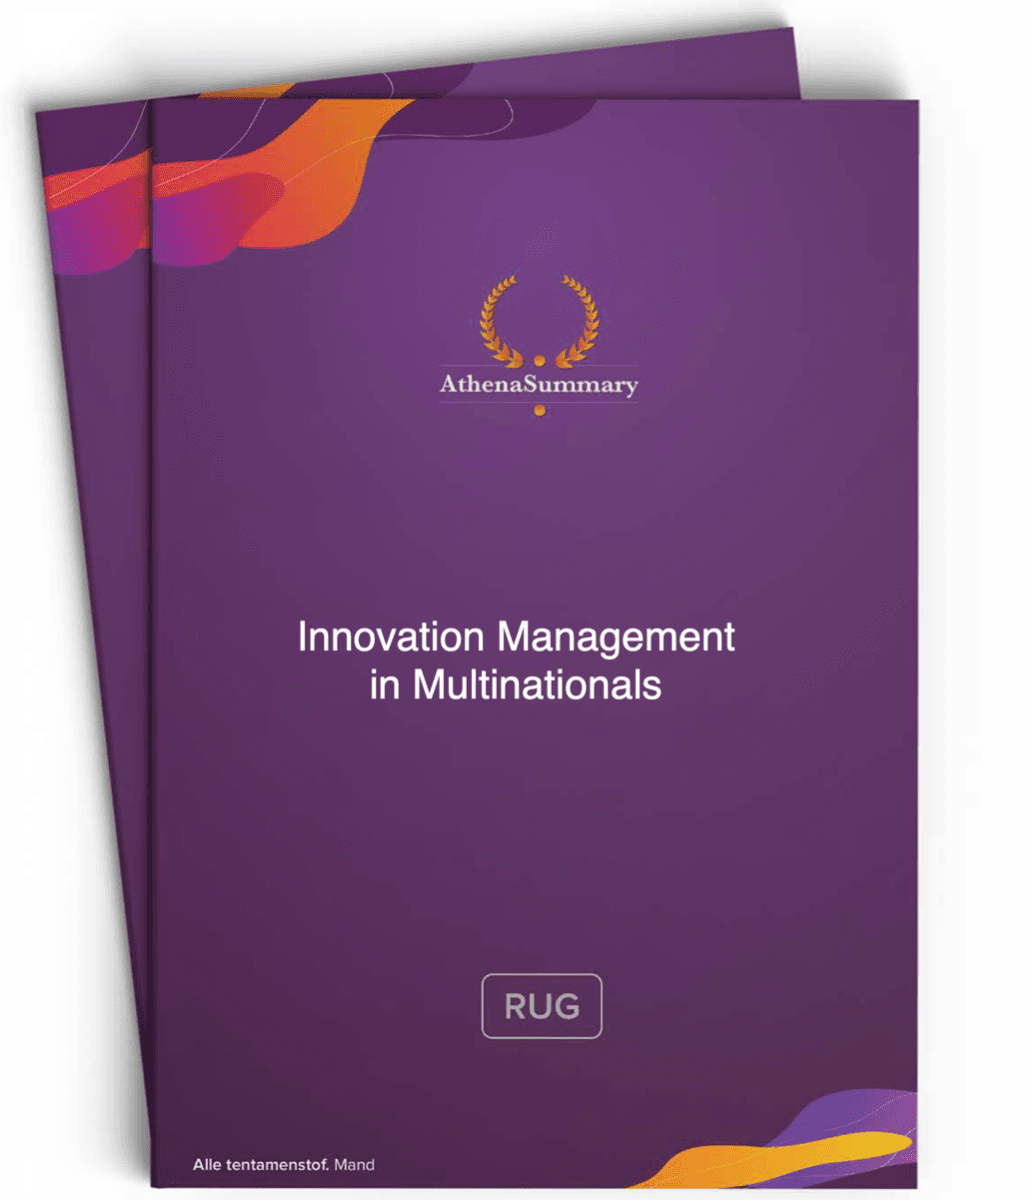 Literature Summary - Innovation Management in Multinationals